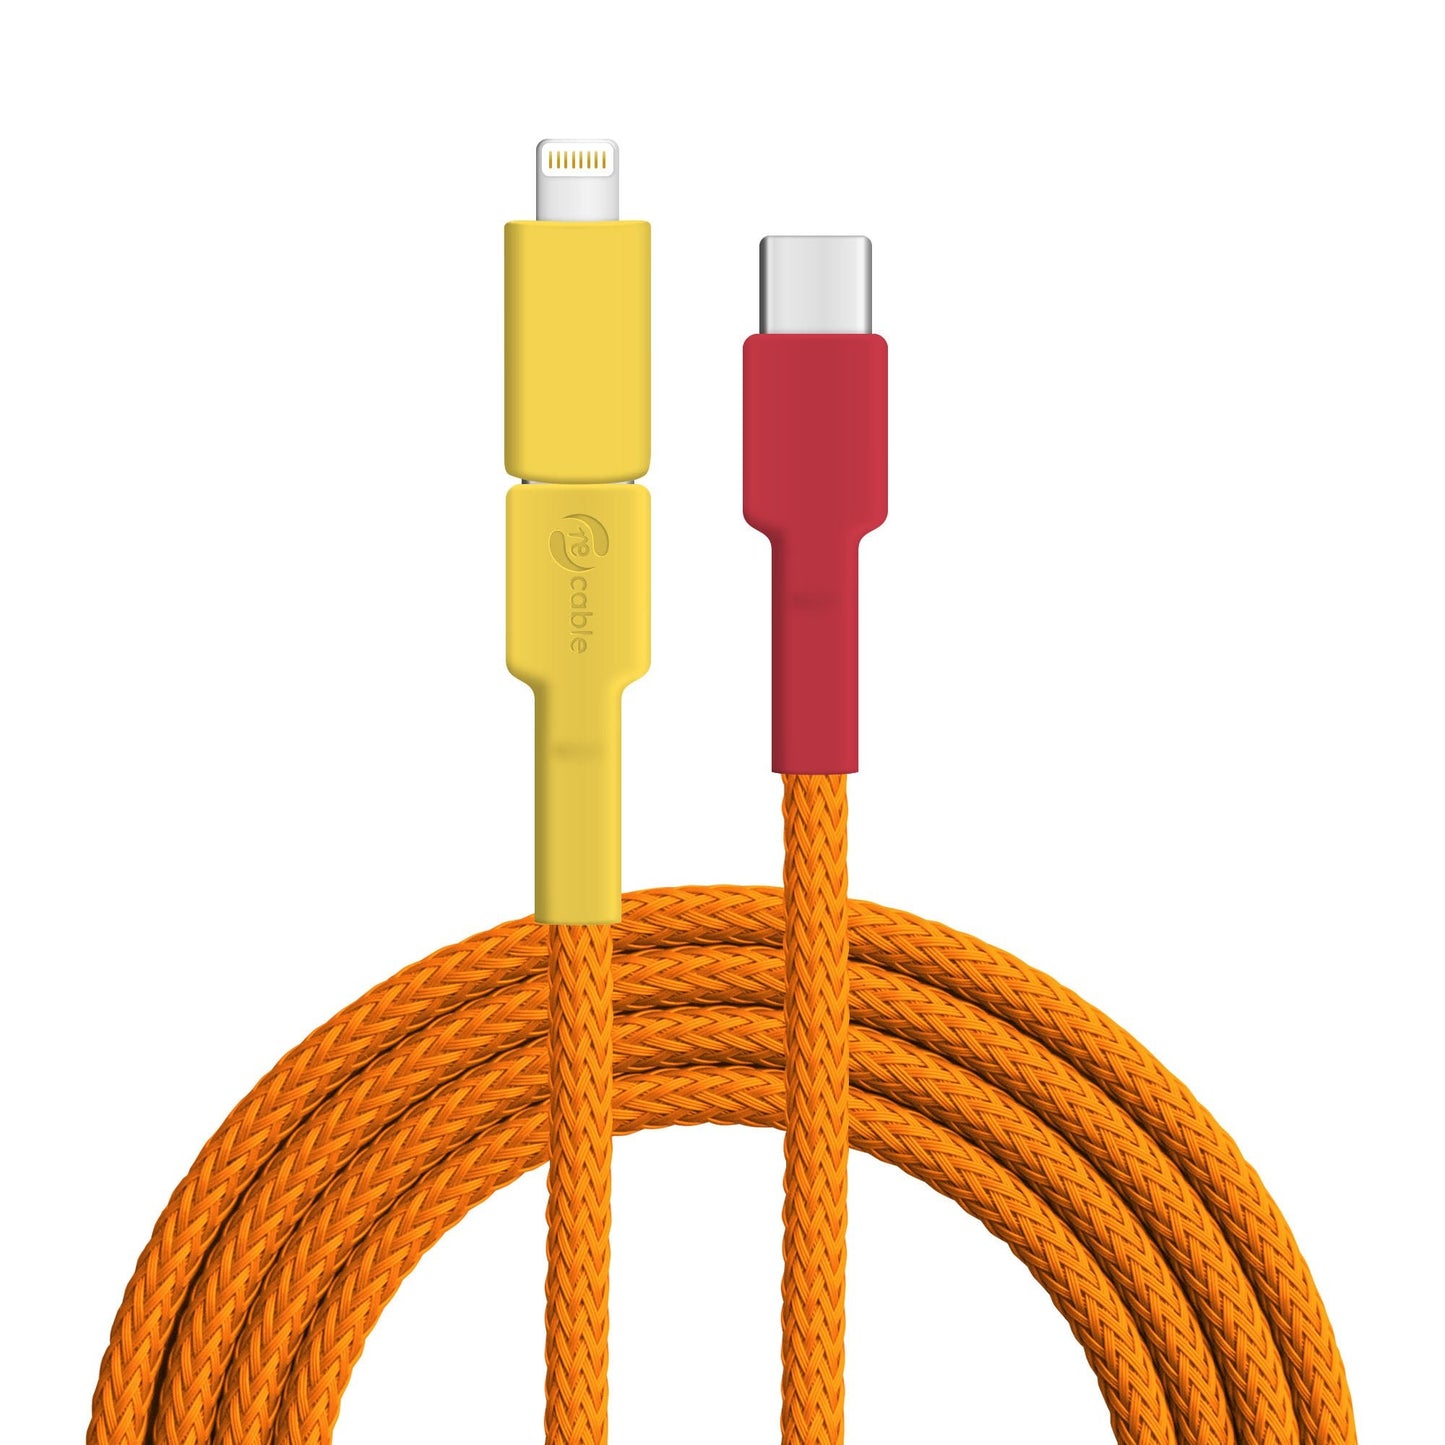 USB-Kabel, Design: Flammenlaubenvogel, Anschlüsse: USB C auf USB C mit Lightning Adapter (verbunden)